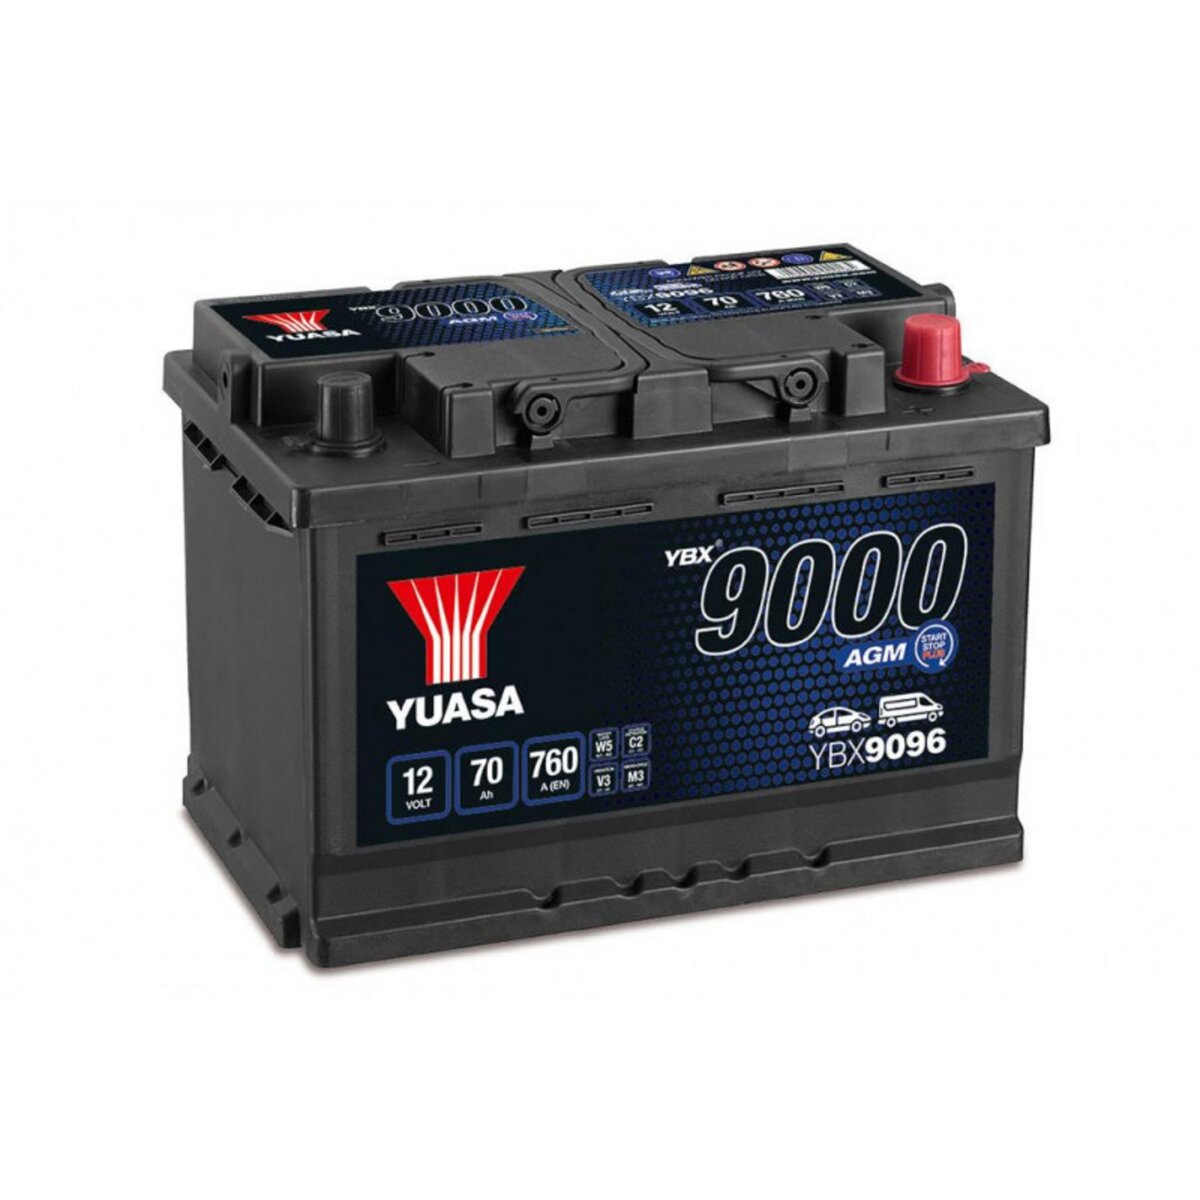 YUASA Batterie YUASA YBX9096 AGM 12V 70AH 760A pas cher 